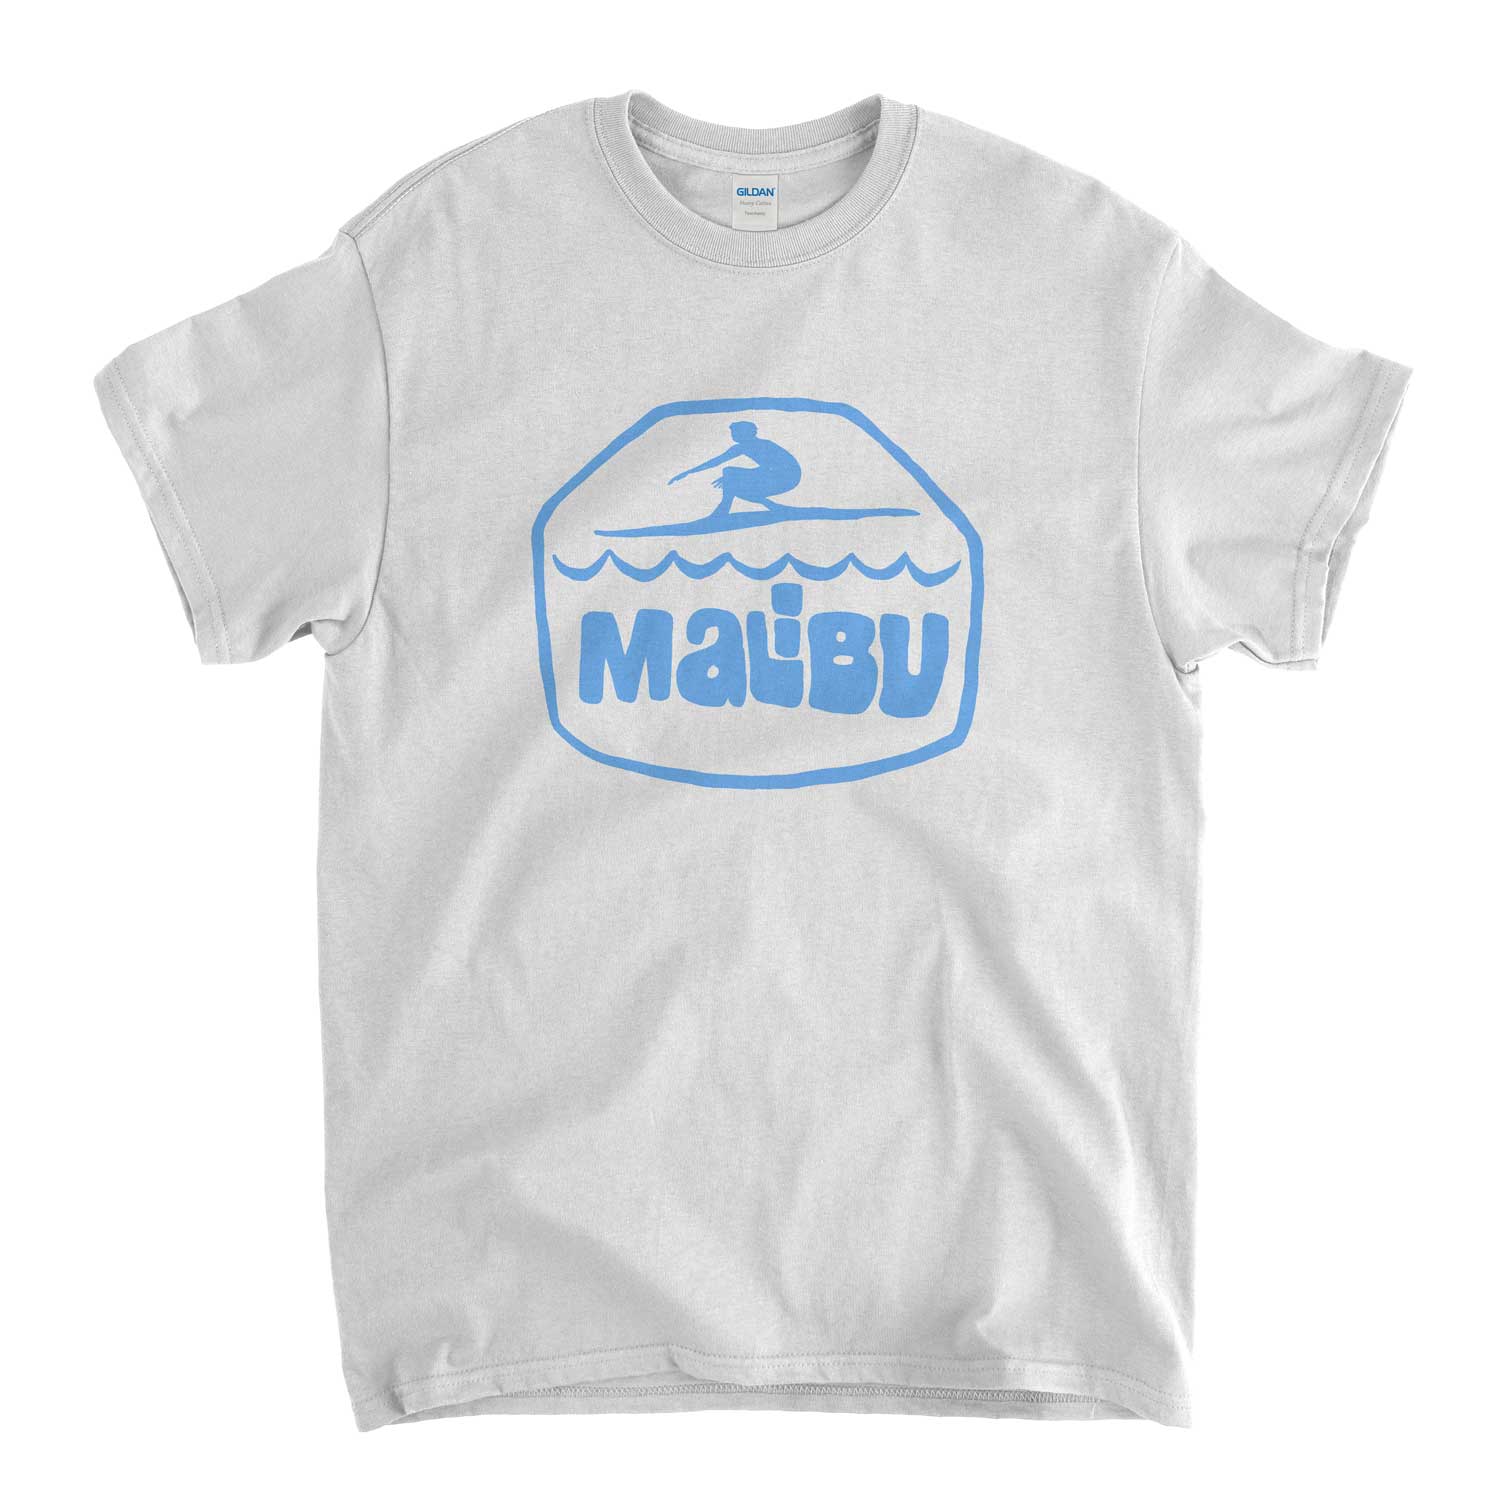 Malibu T Shirt - Surfing Classic As Worn By Carl Wilson